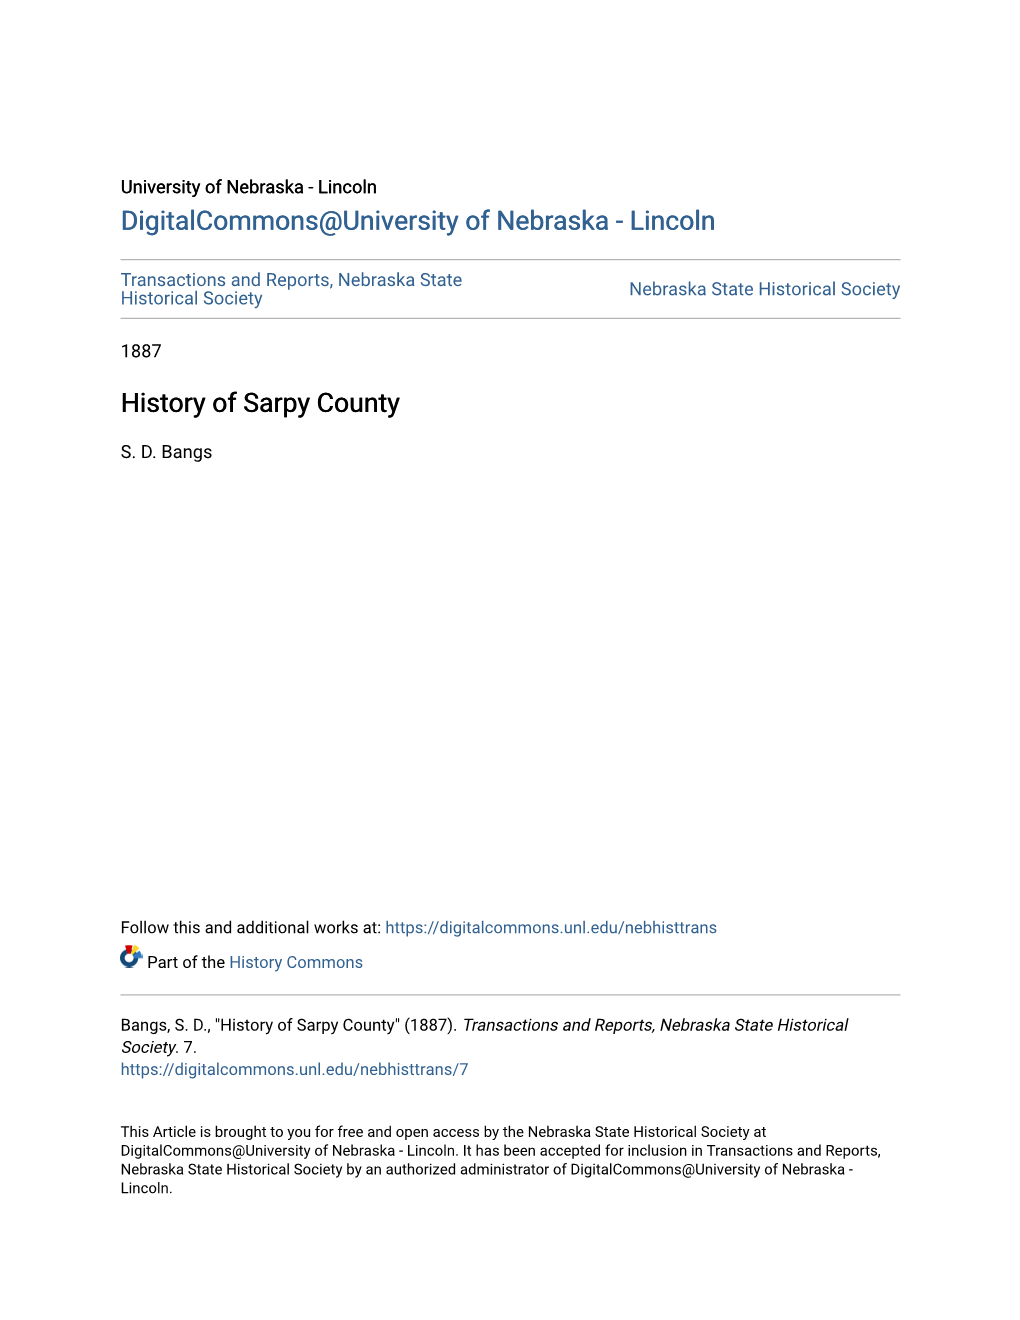 History of Sarpy County